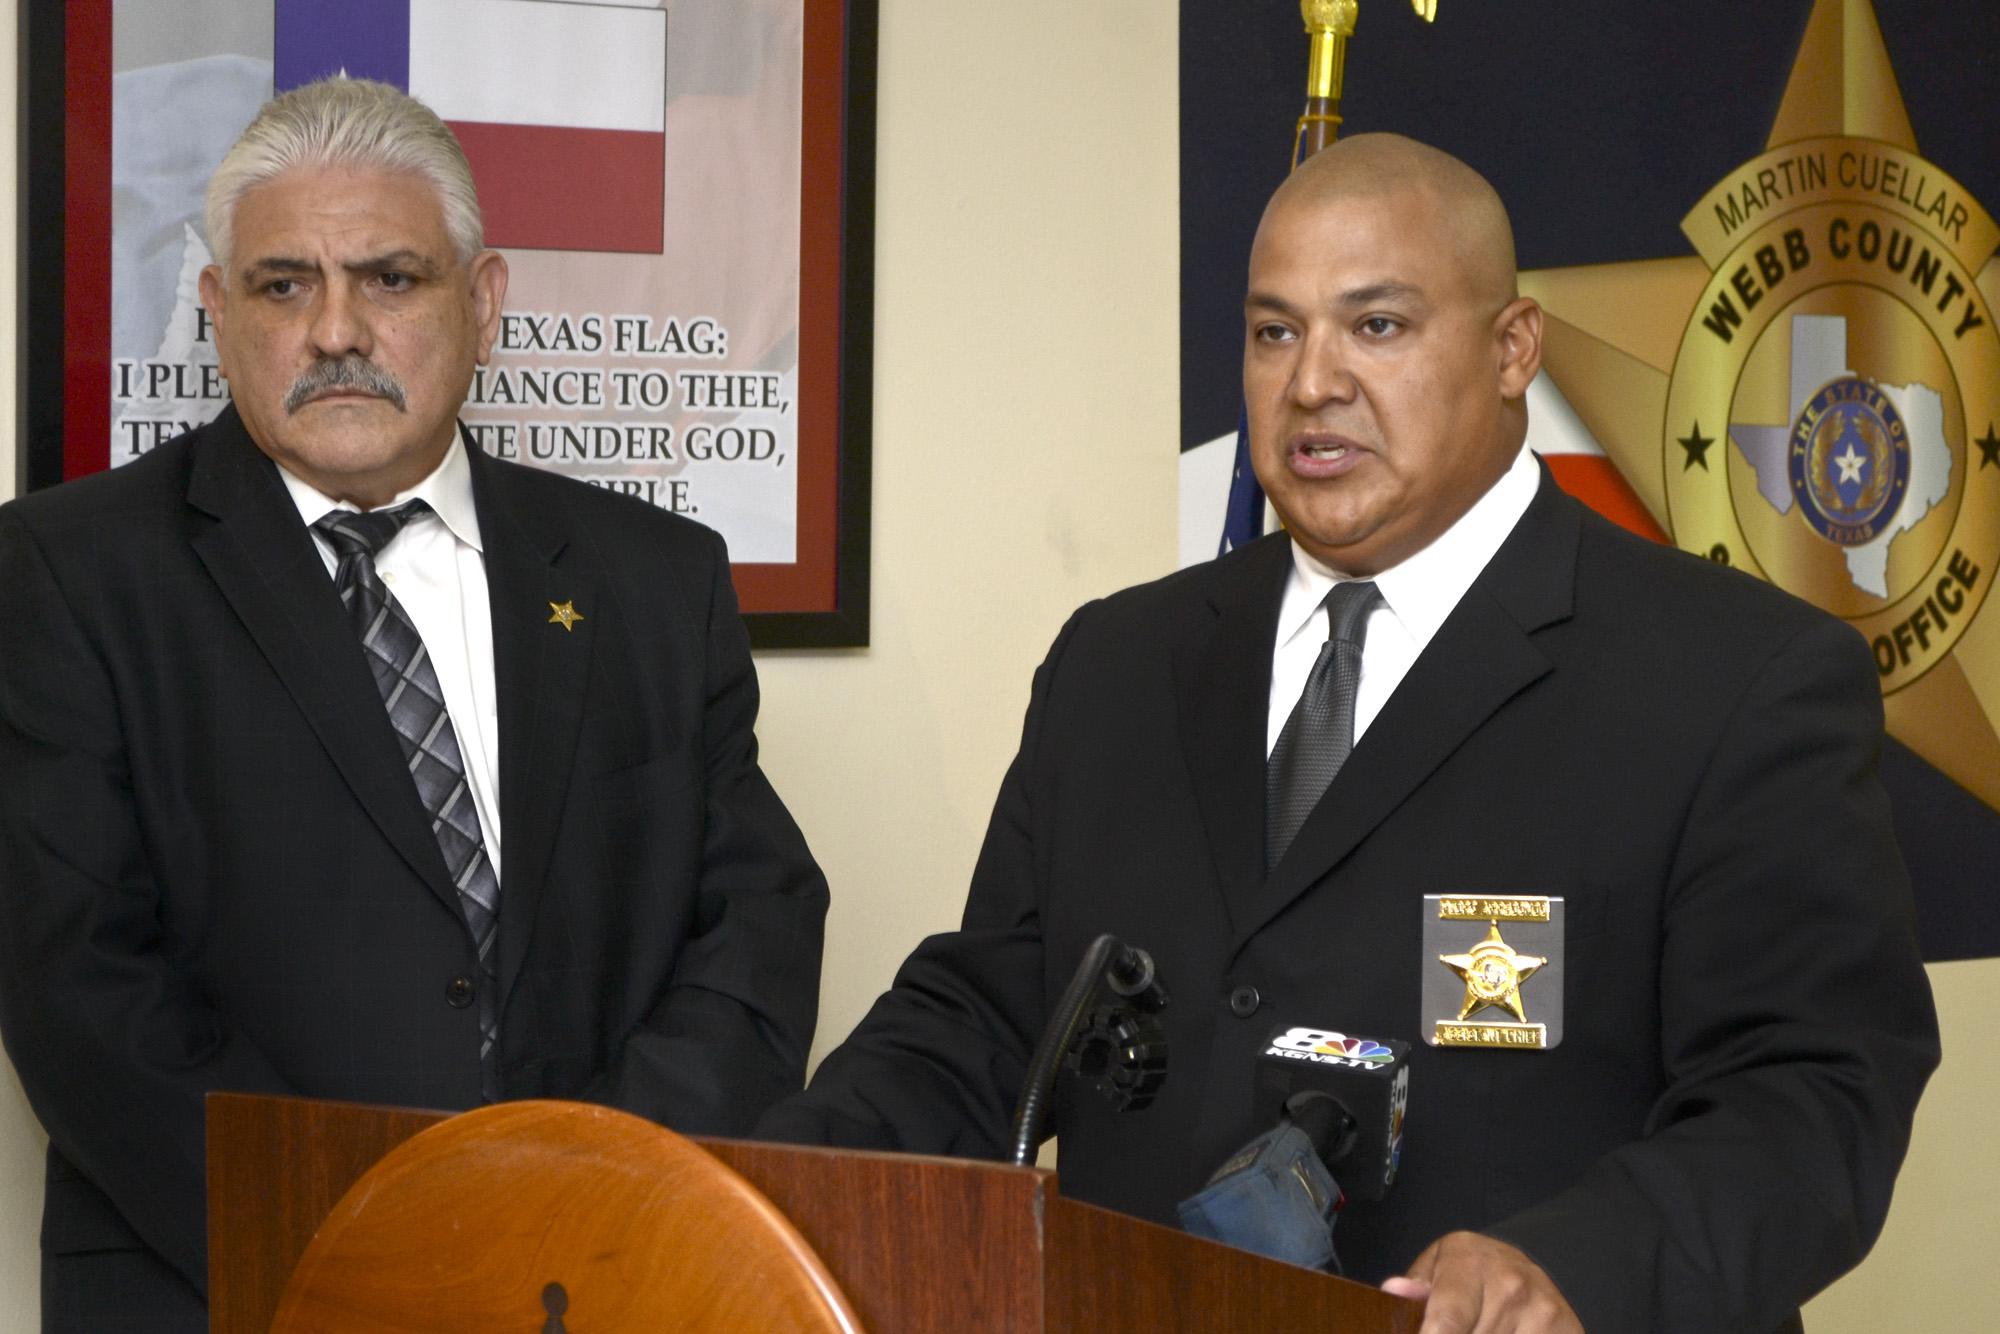 Martin Cuellar: Arredondo was demoted by Webb Co. Sheriff’s Office in 2014